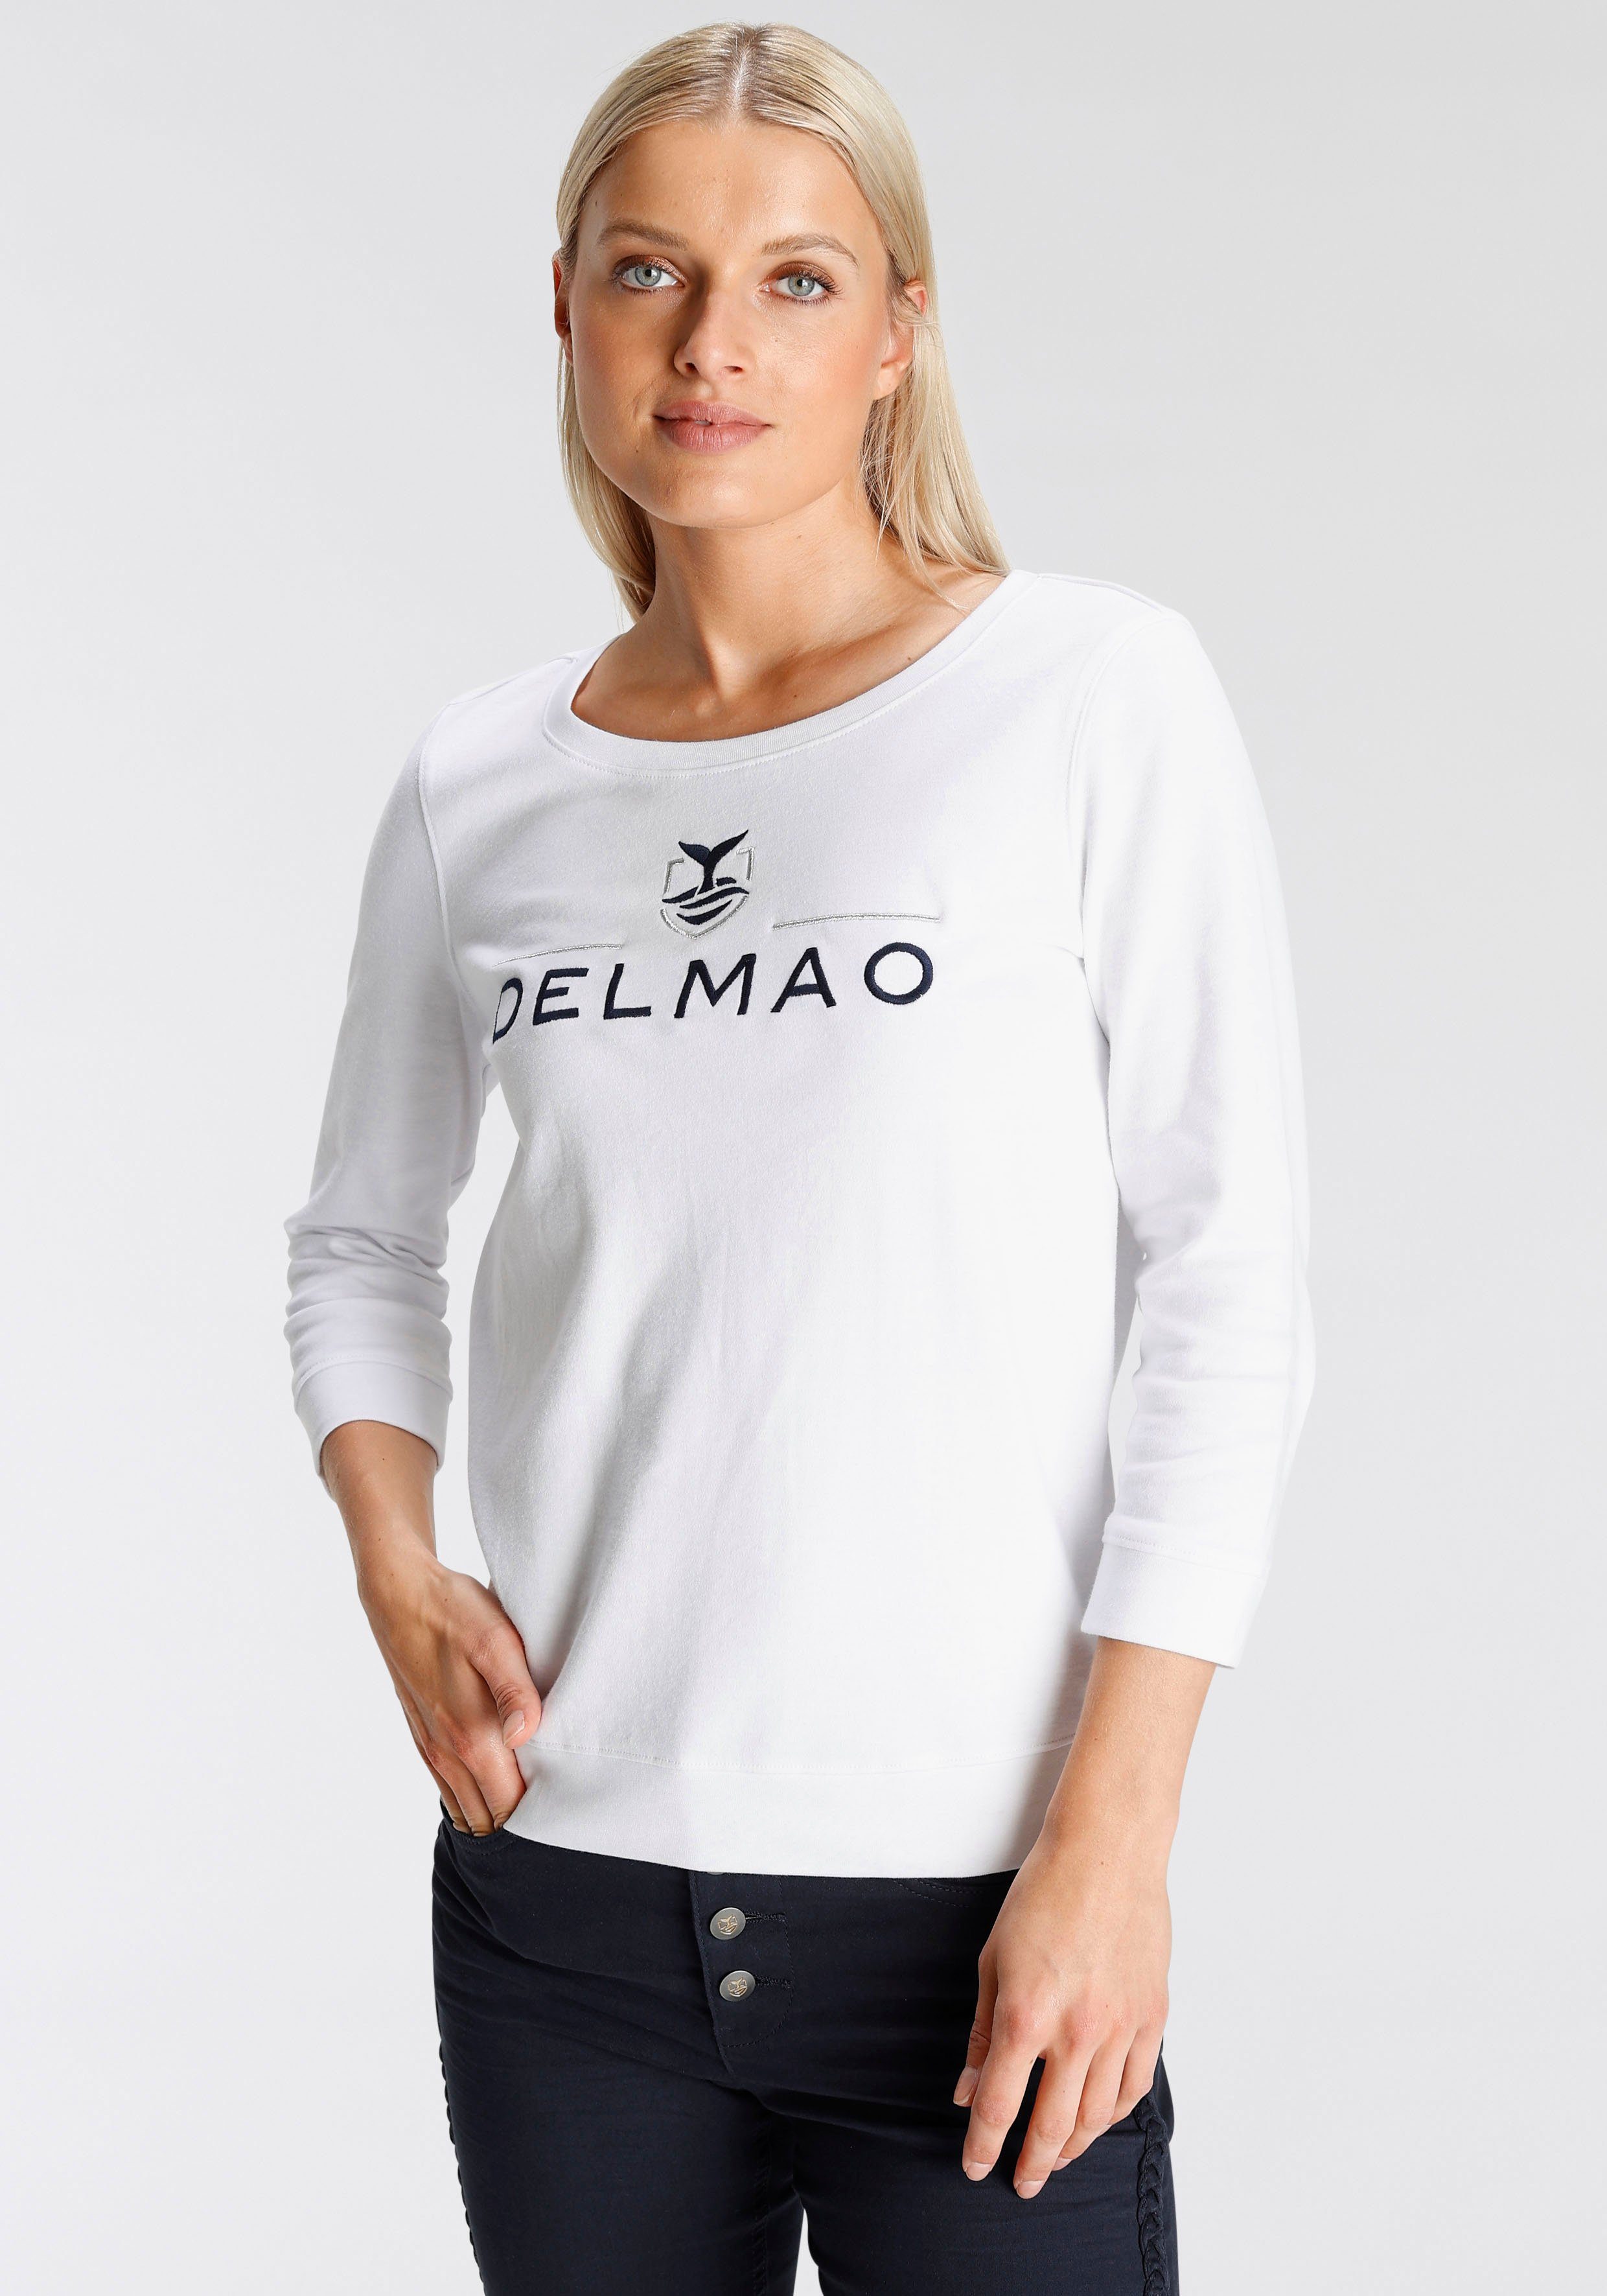 DELMAO Sweatshirt NEUE MARKE! | Kapuzenshirts